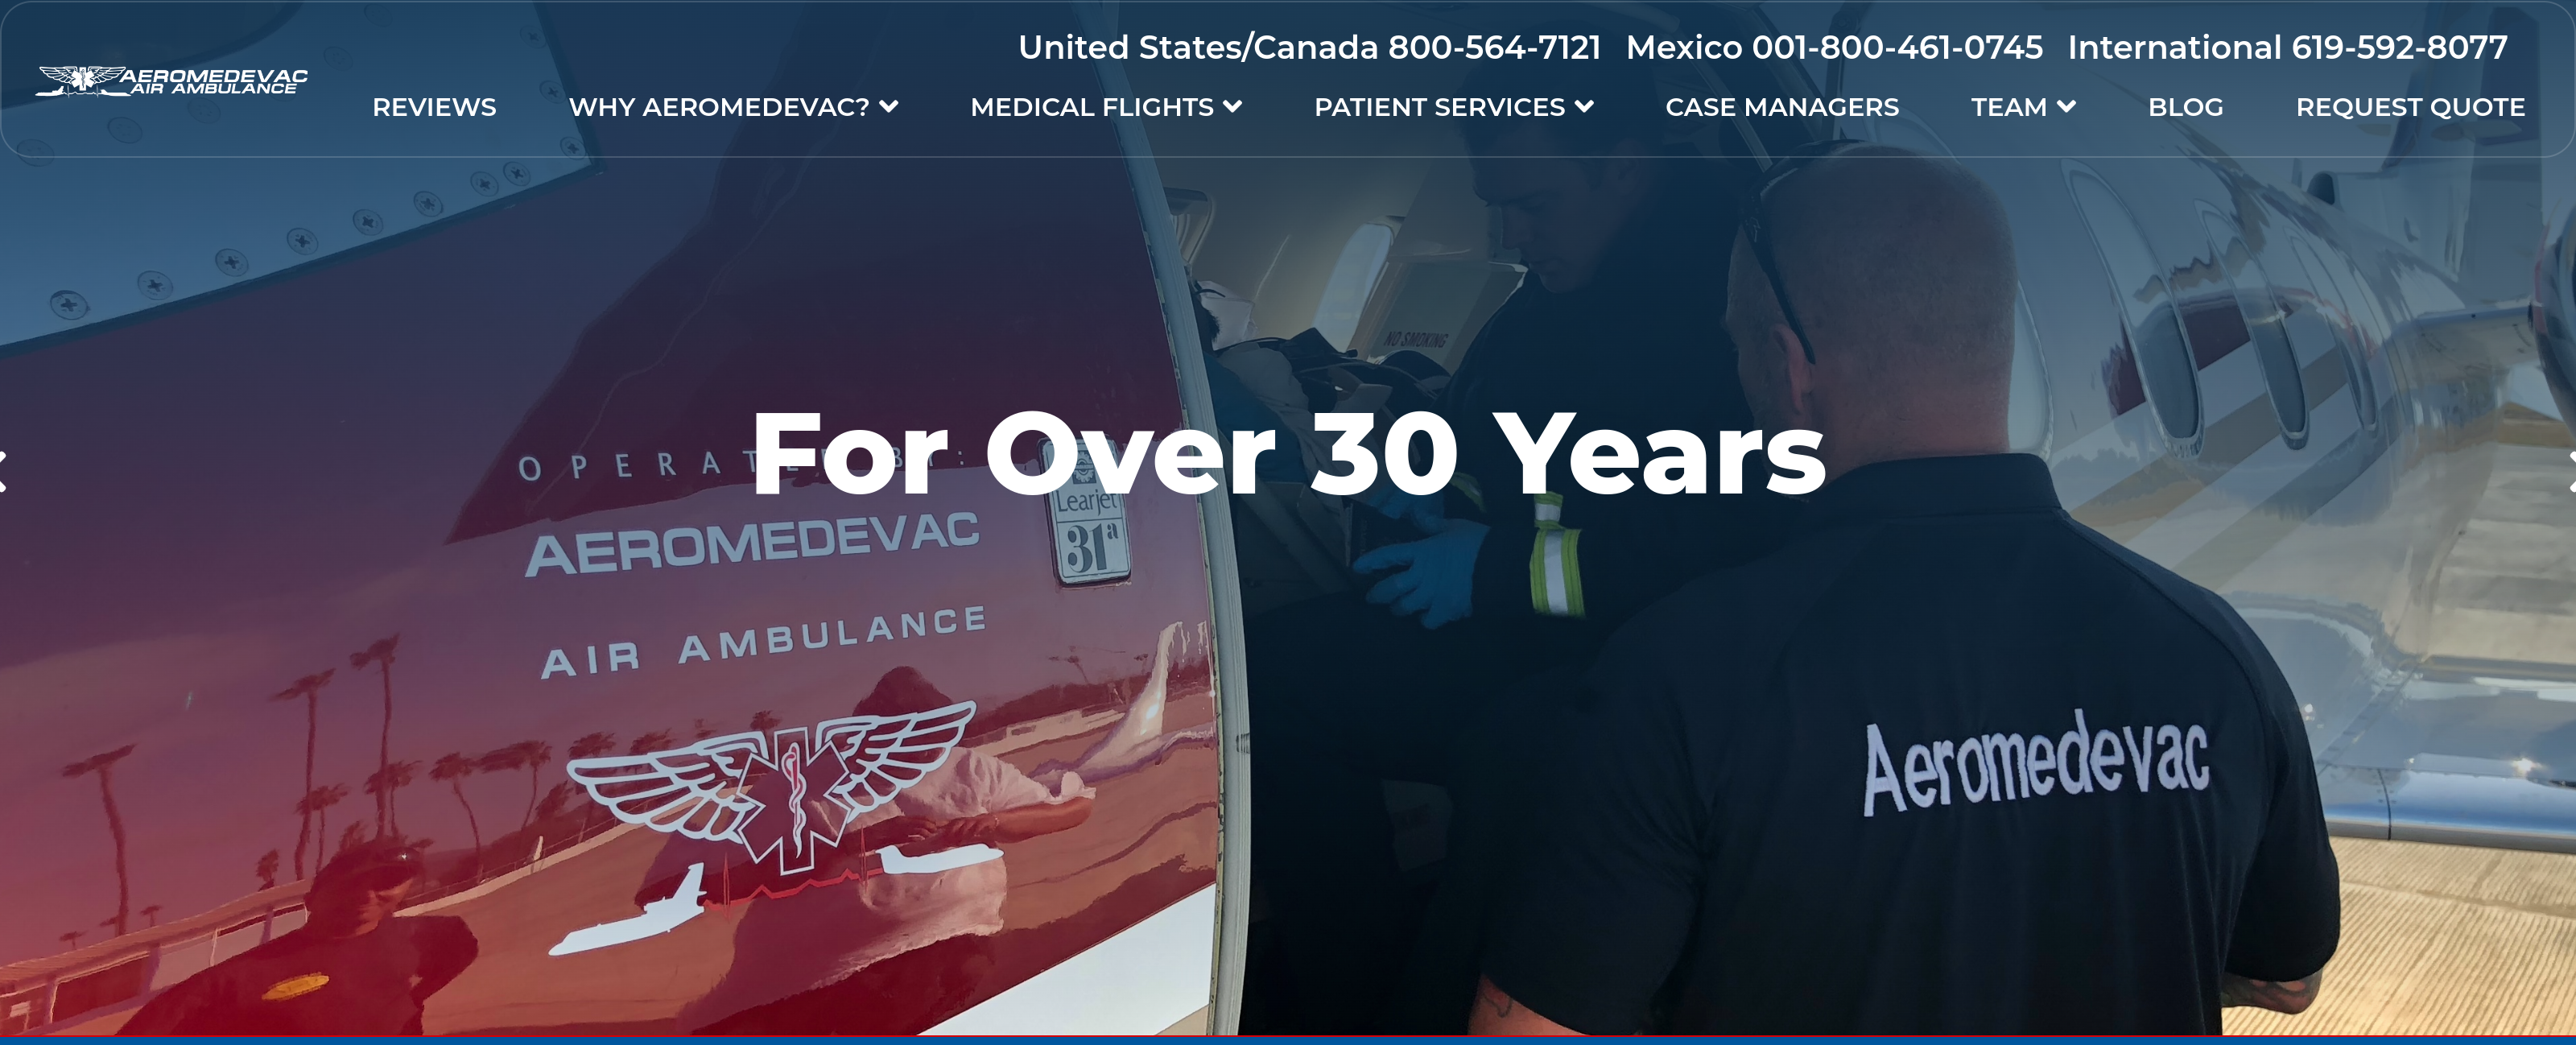 Preview of the new Aeromedevac.com Air Ambulance website 